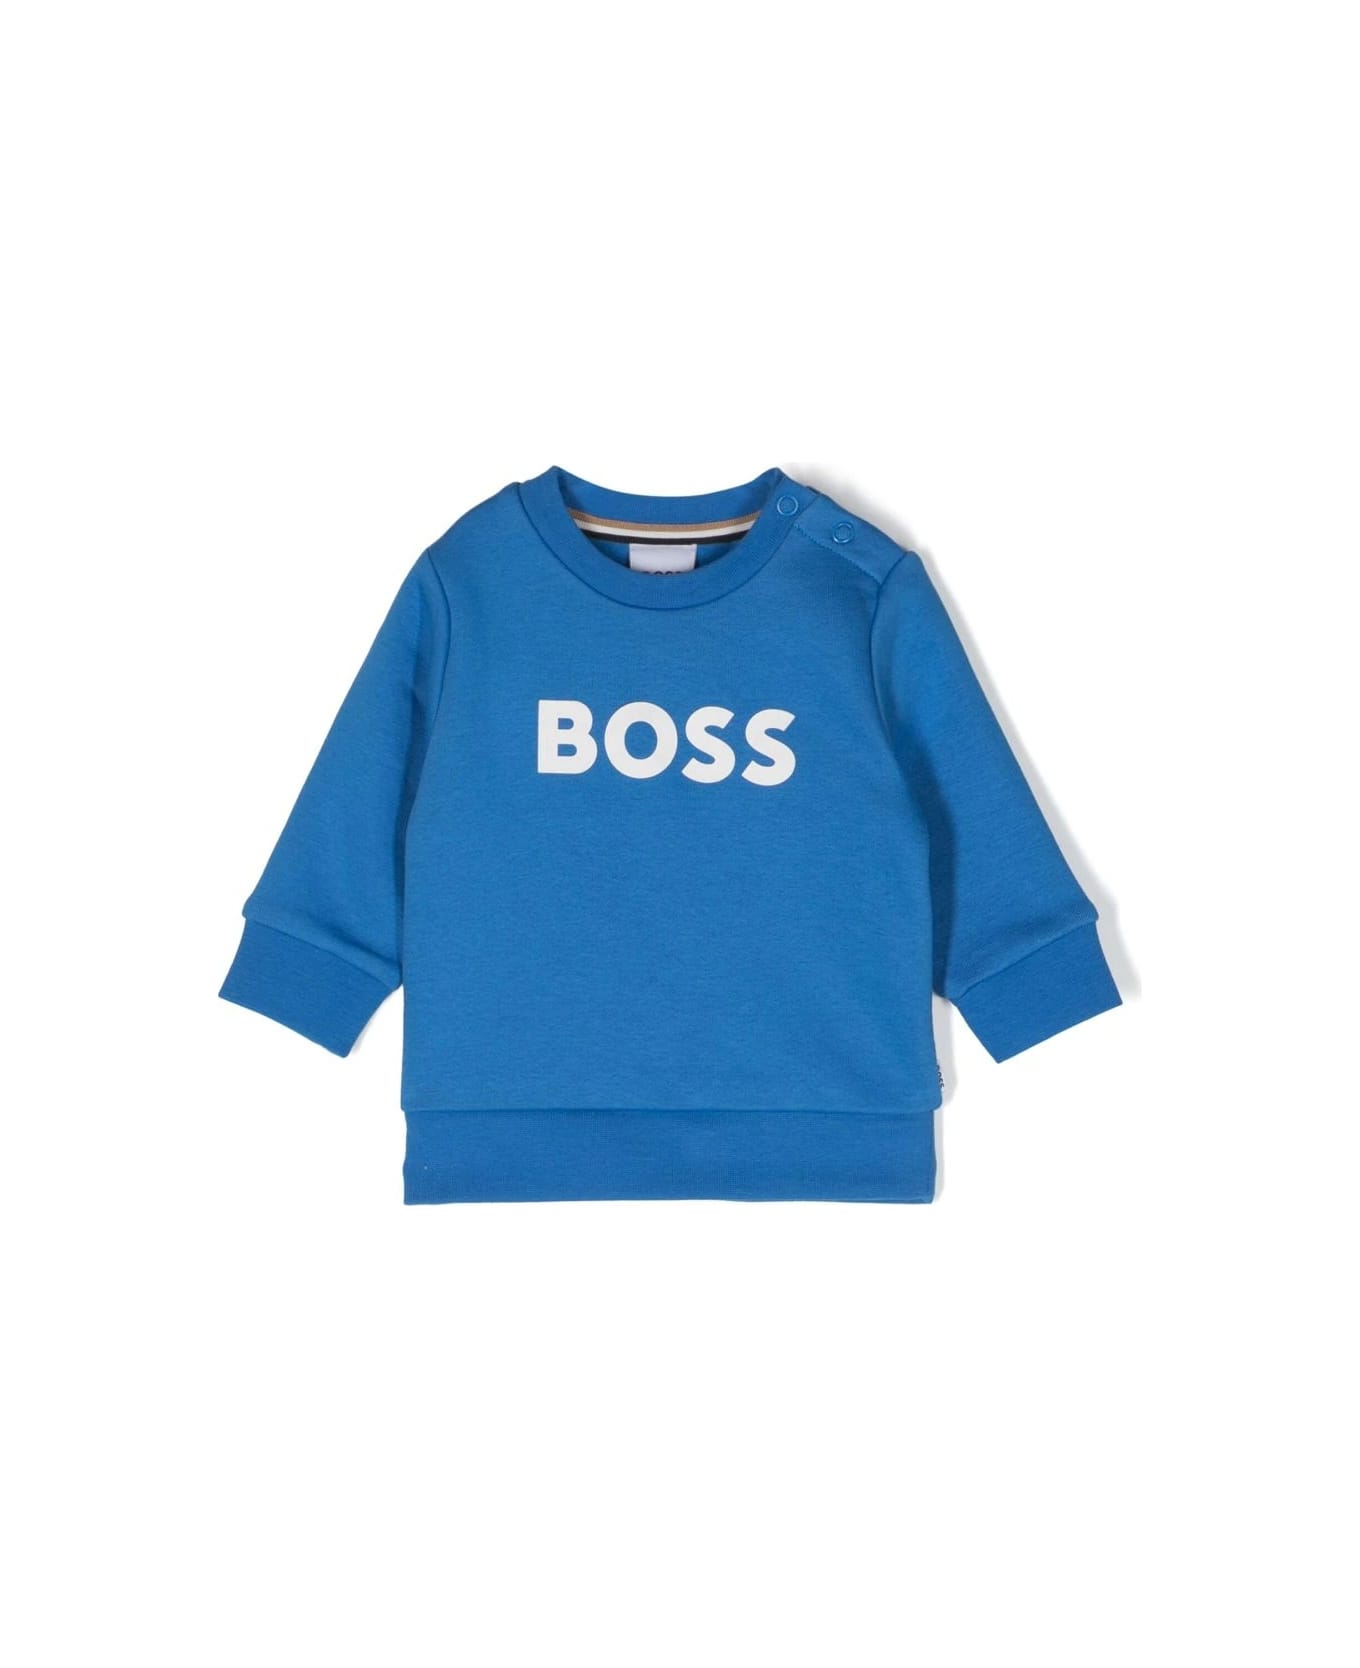 Hugo Boss Sweatshirt With Print - Blue ニットウェア＆スウェットシャツ